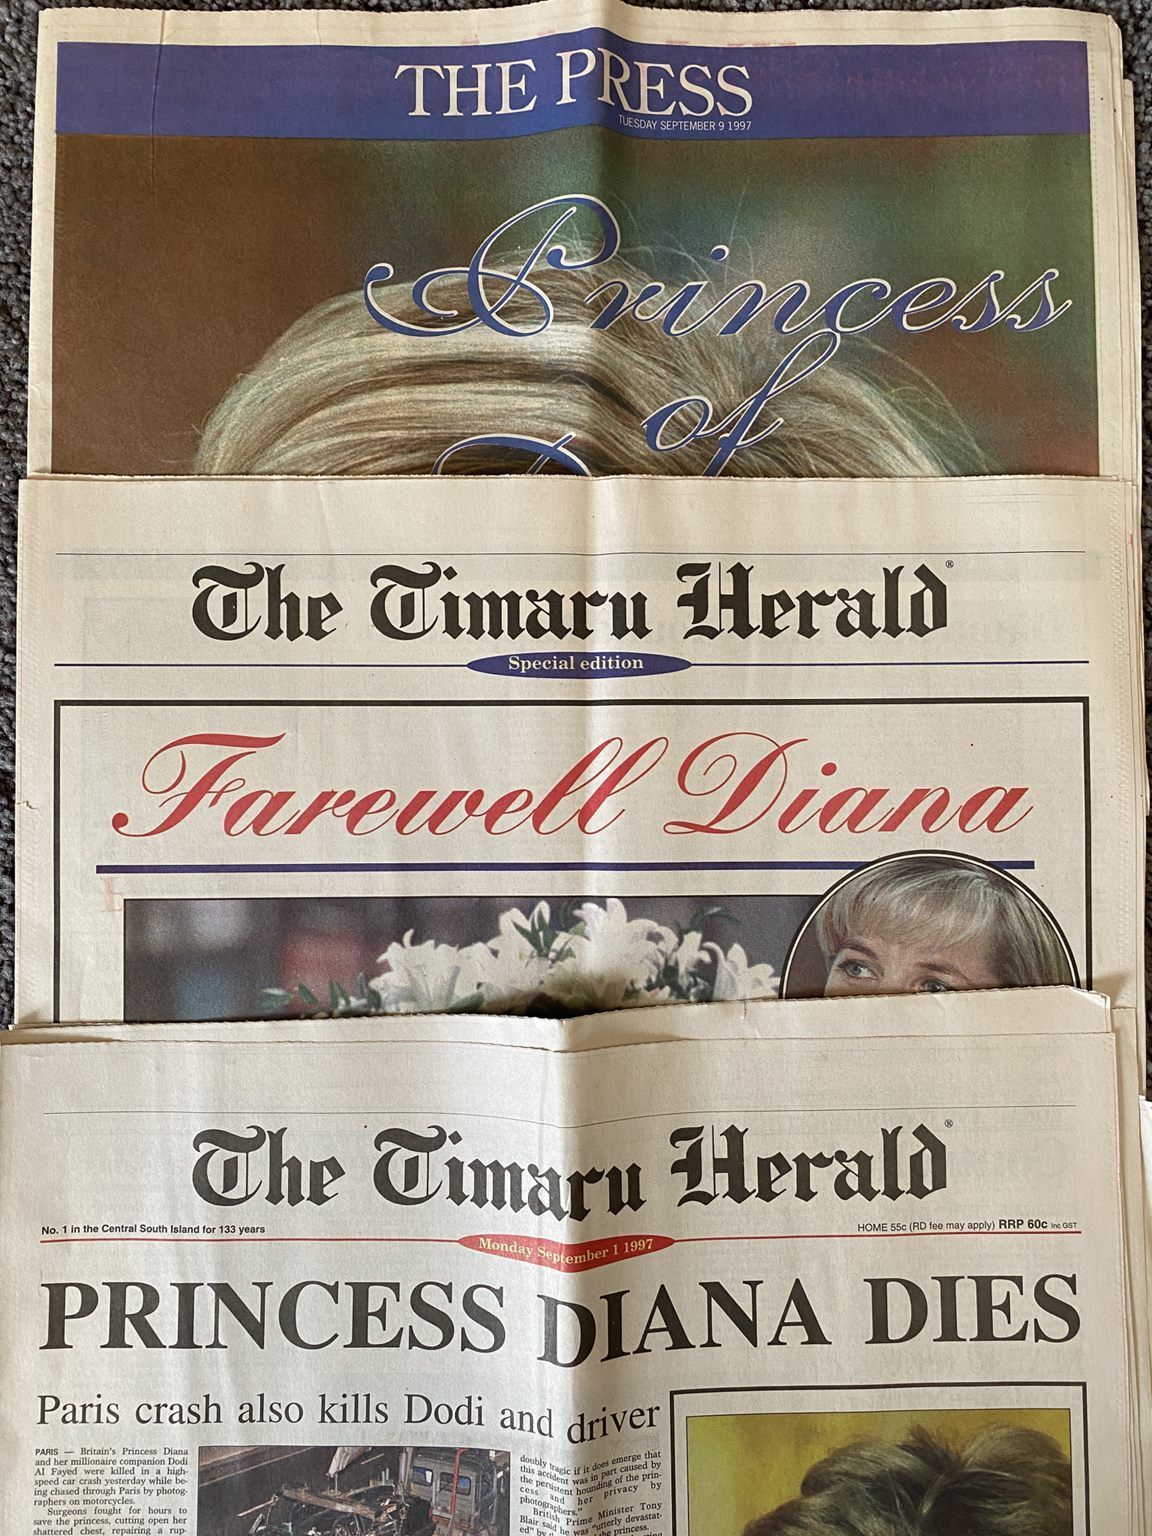 OLD NEWSPAPER: The Timaru Herald + The Press 1997 - Death of Princess Diana